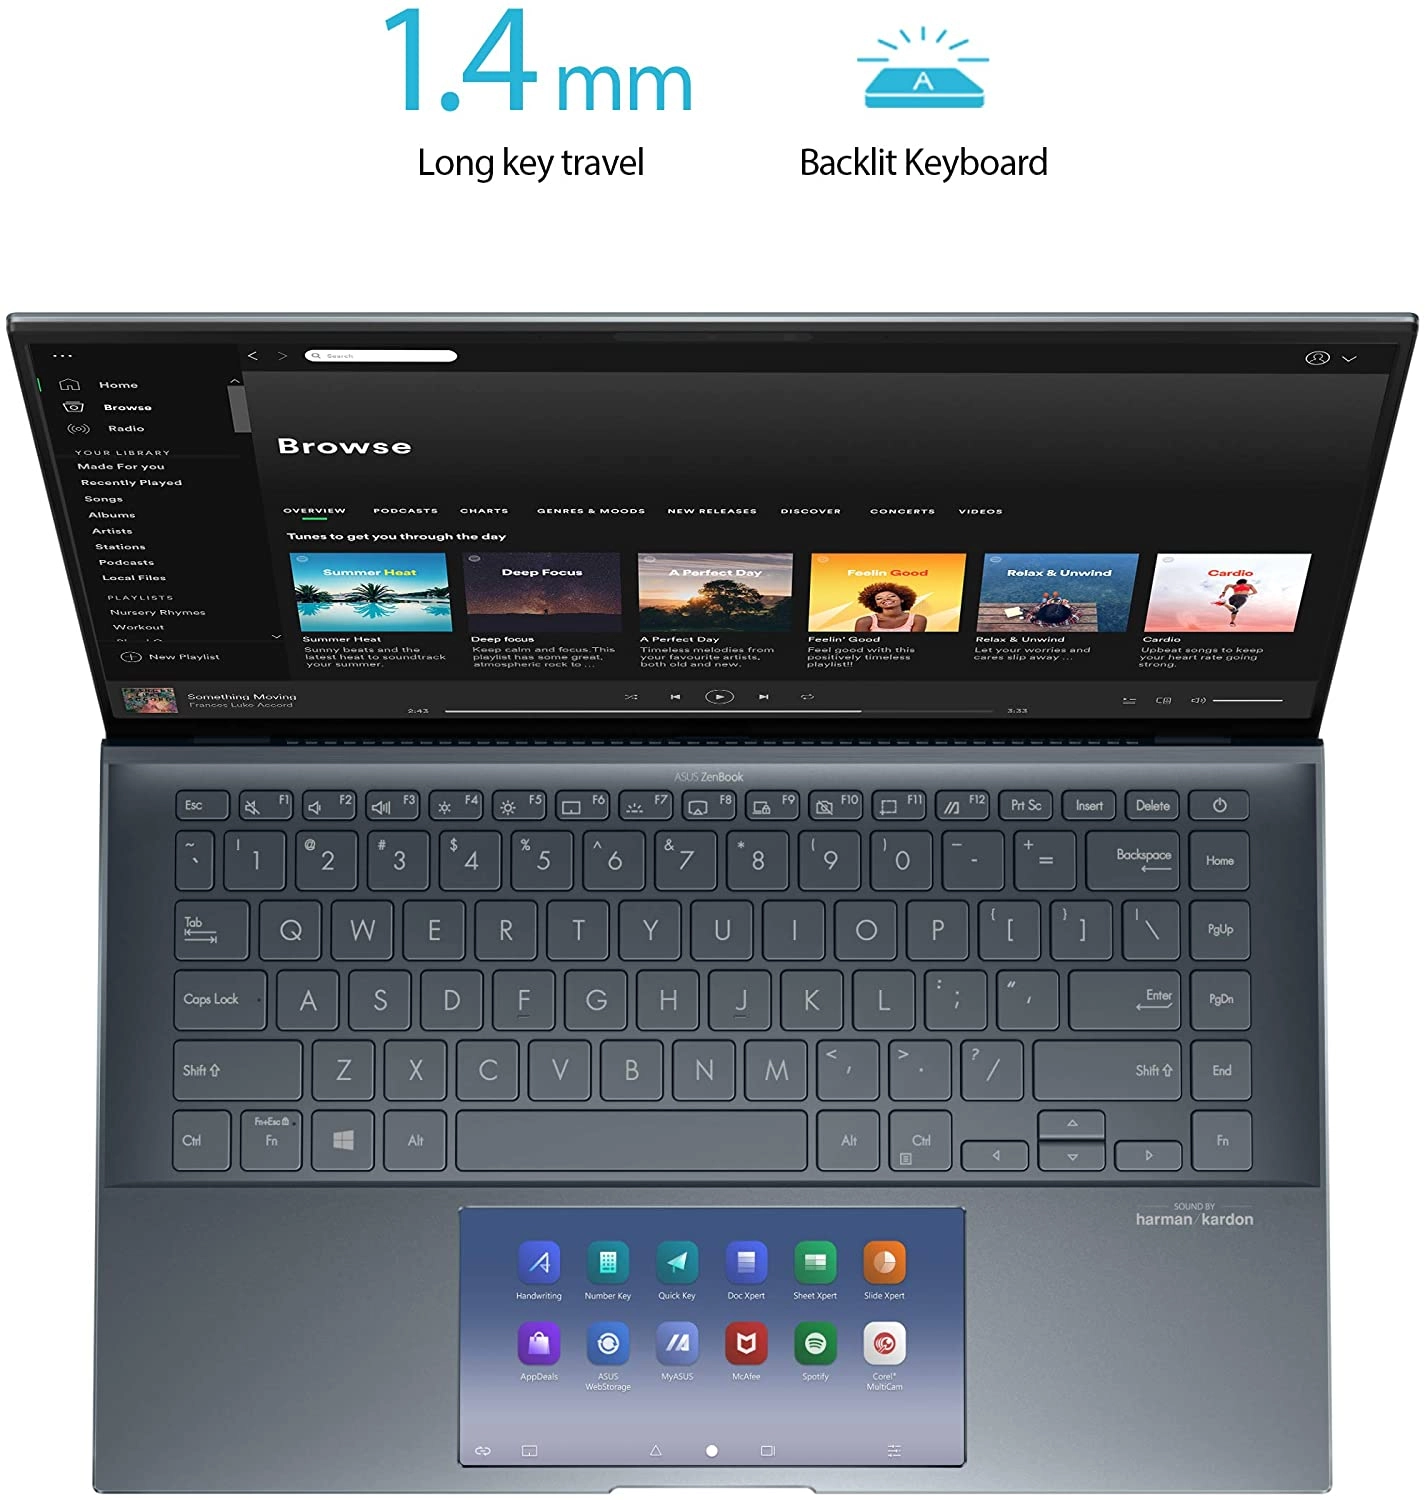 Asus ZenBook 14 laptop image